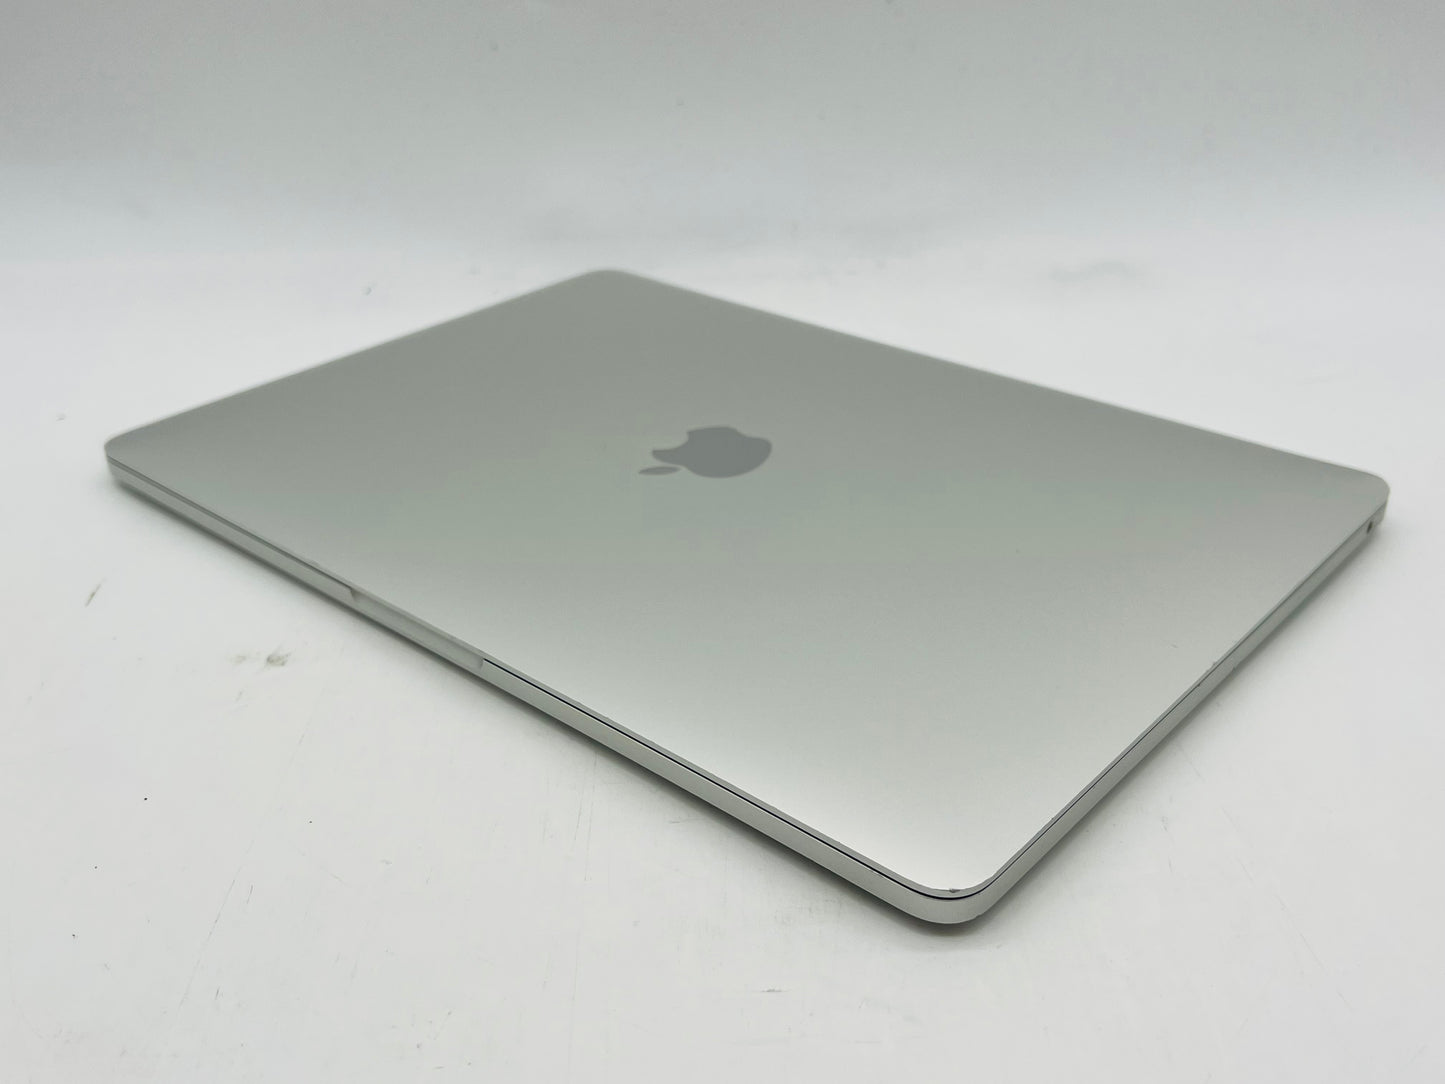 Apple 2019 MacBook Pro 13 in TB 1.4GHz i5 16GB RAM 128GB SSD IIPG645 - Very Good